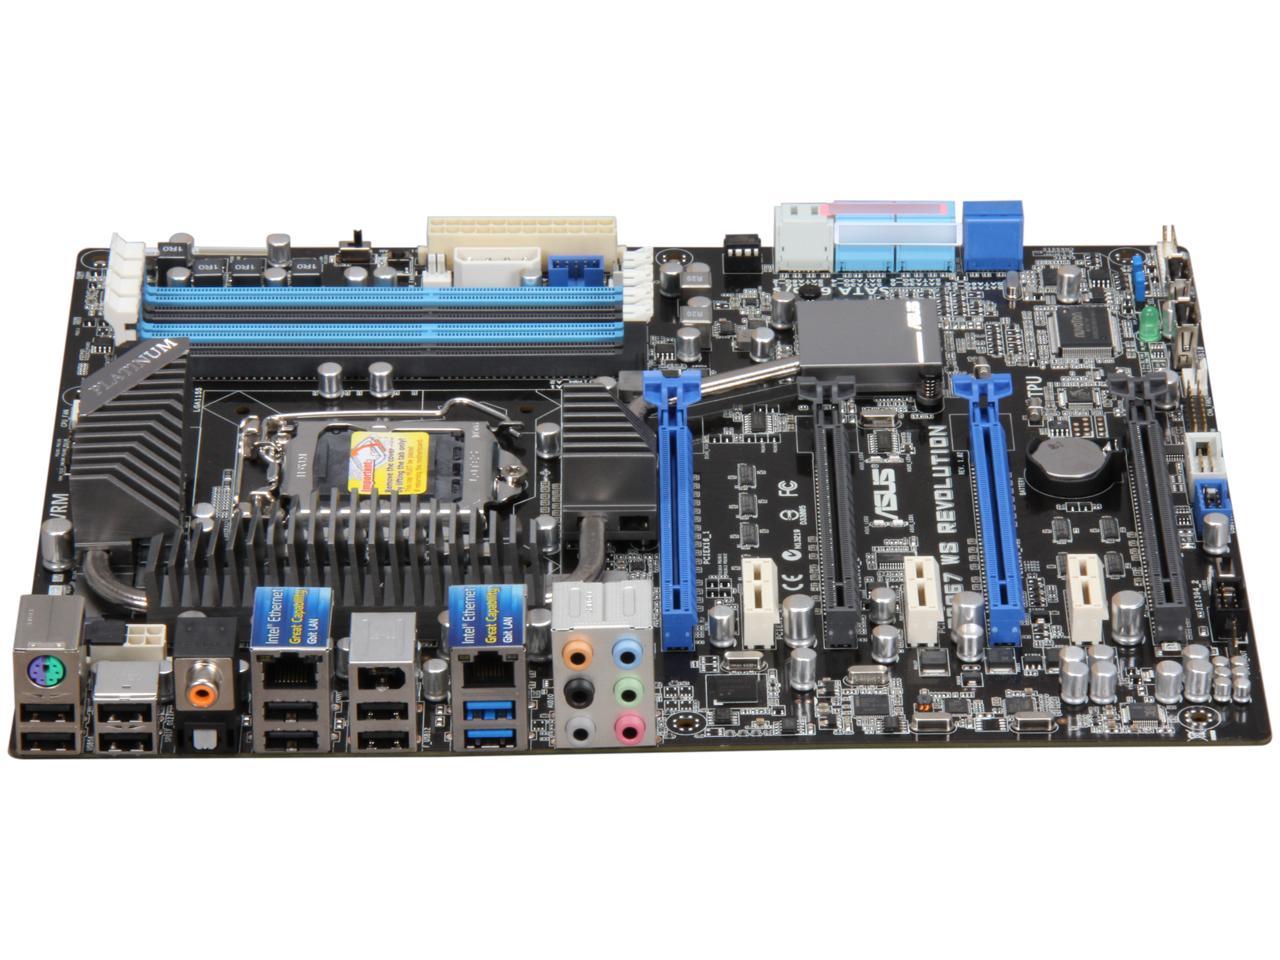 ASUS P8P67 WS REVOLUTION<REV 3.0> LGA 1155 Intel P67 / NVIDIA NF200 SATA 6Gb/s USB 3.0 ATX Intel Motherboard with UEFI BIOS